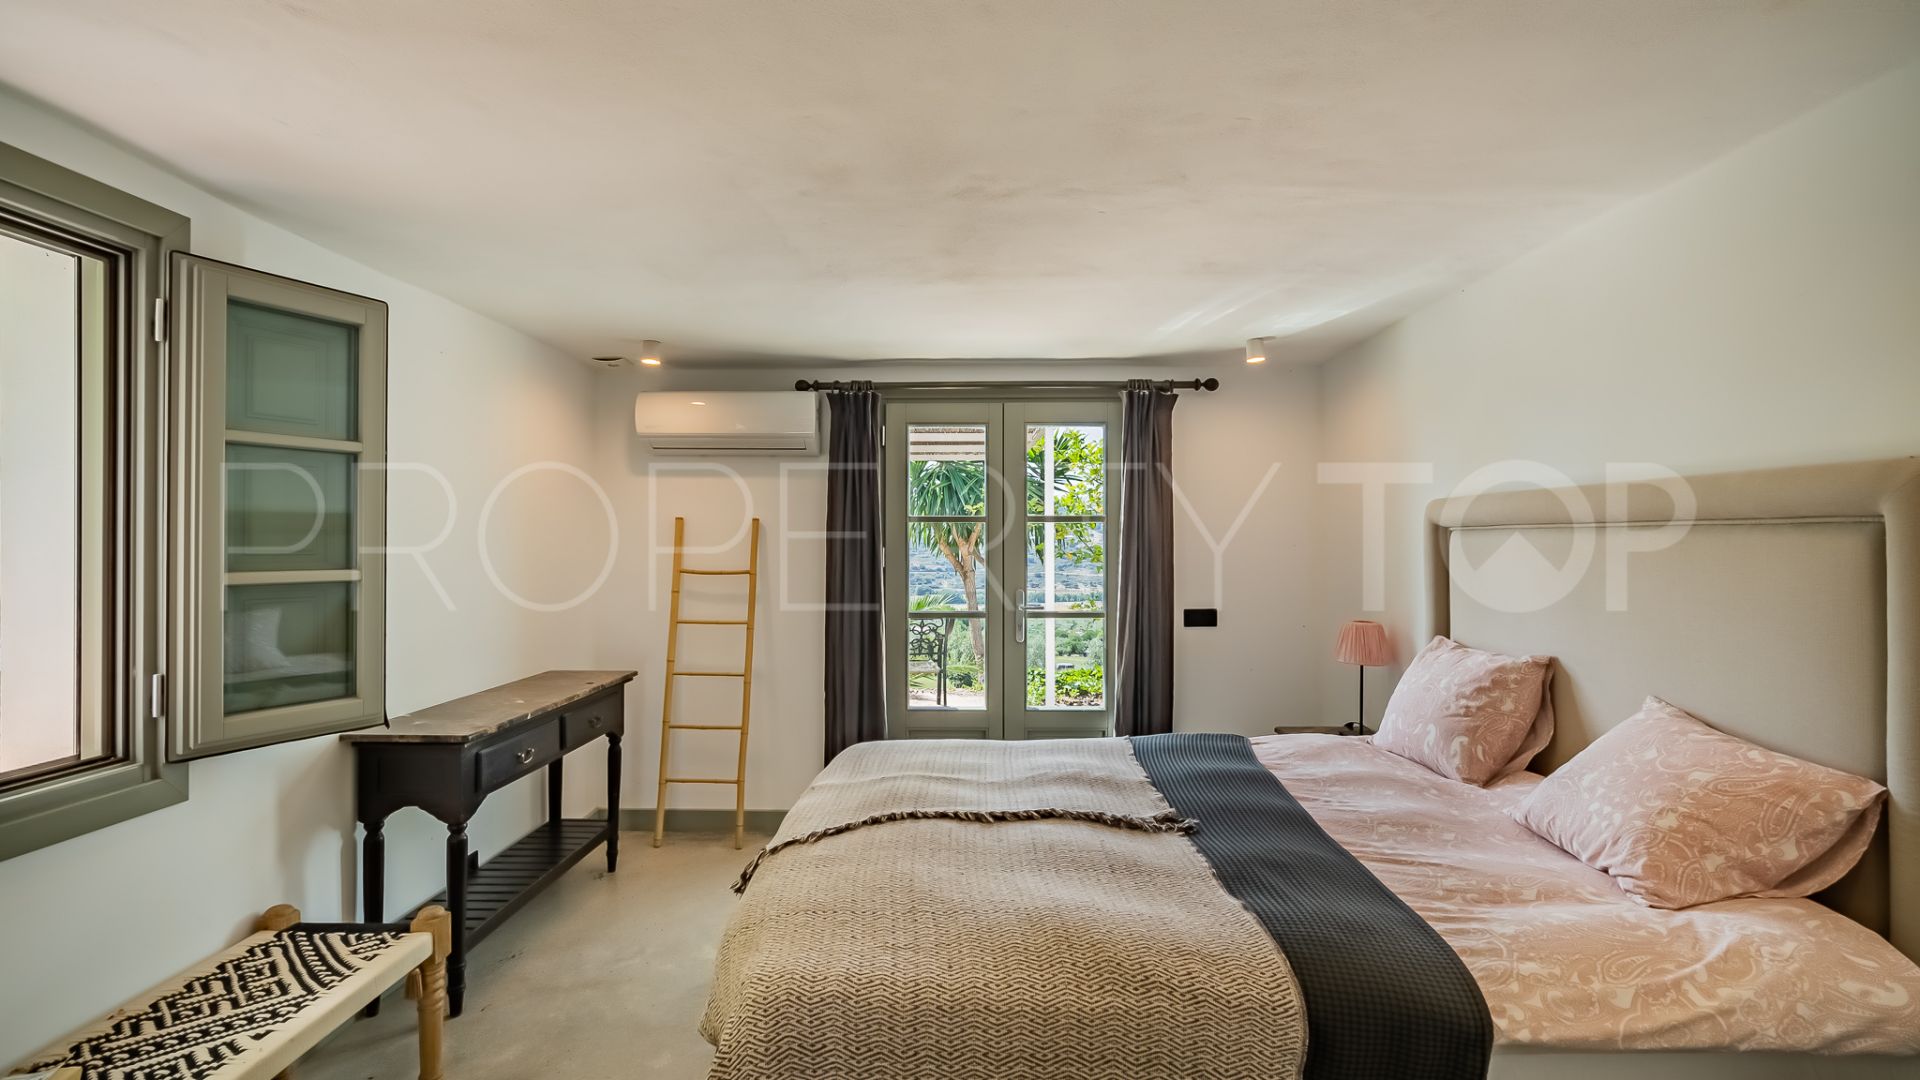 6 bedrooms villa in Ronda for sale